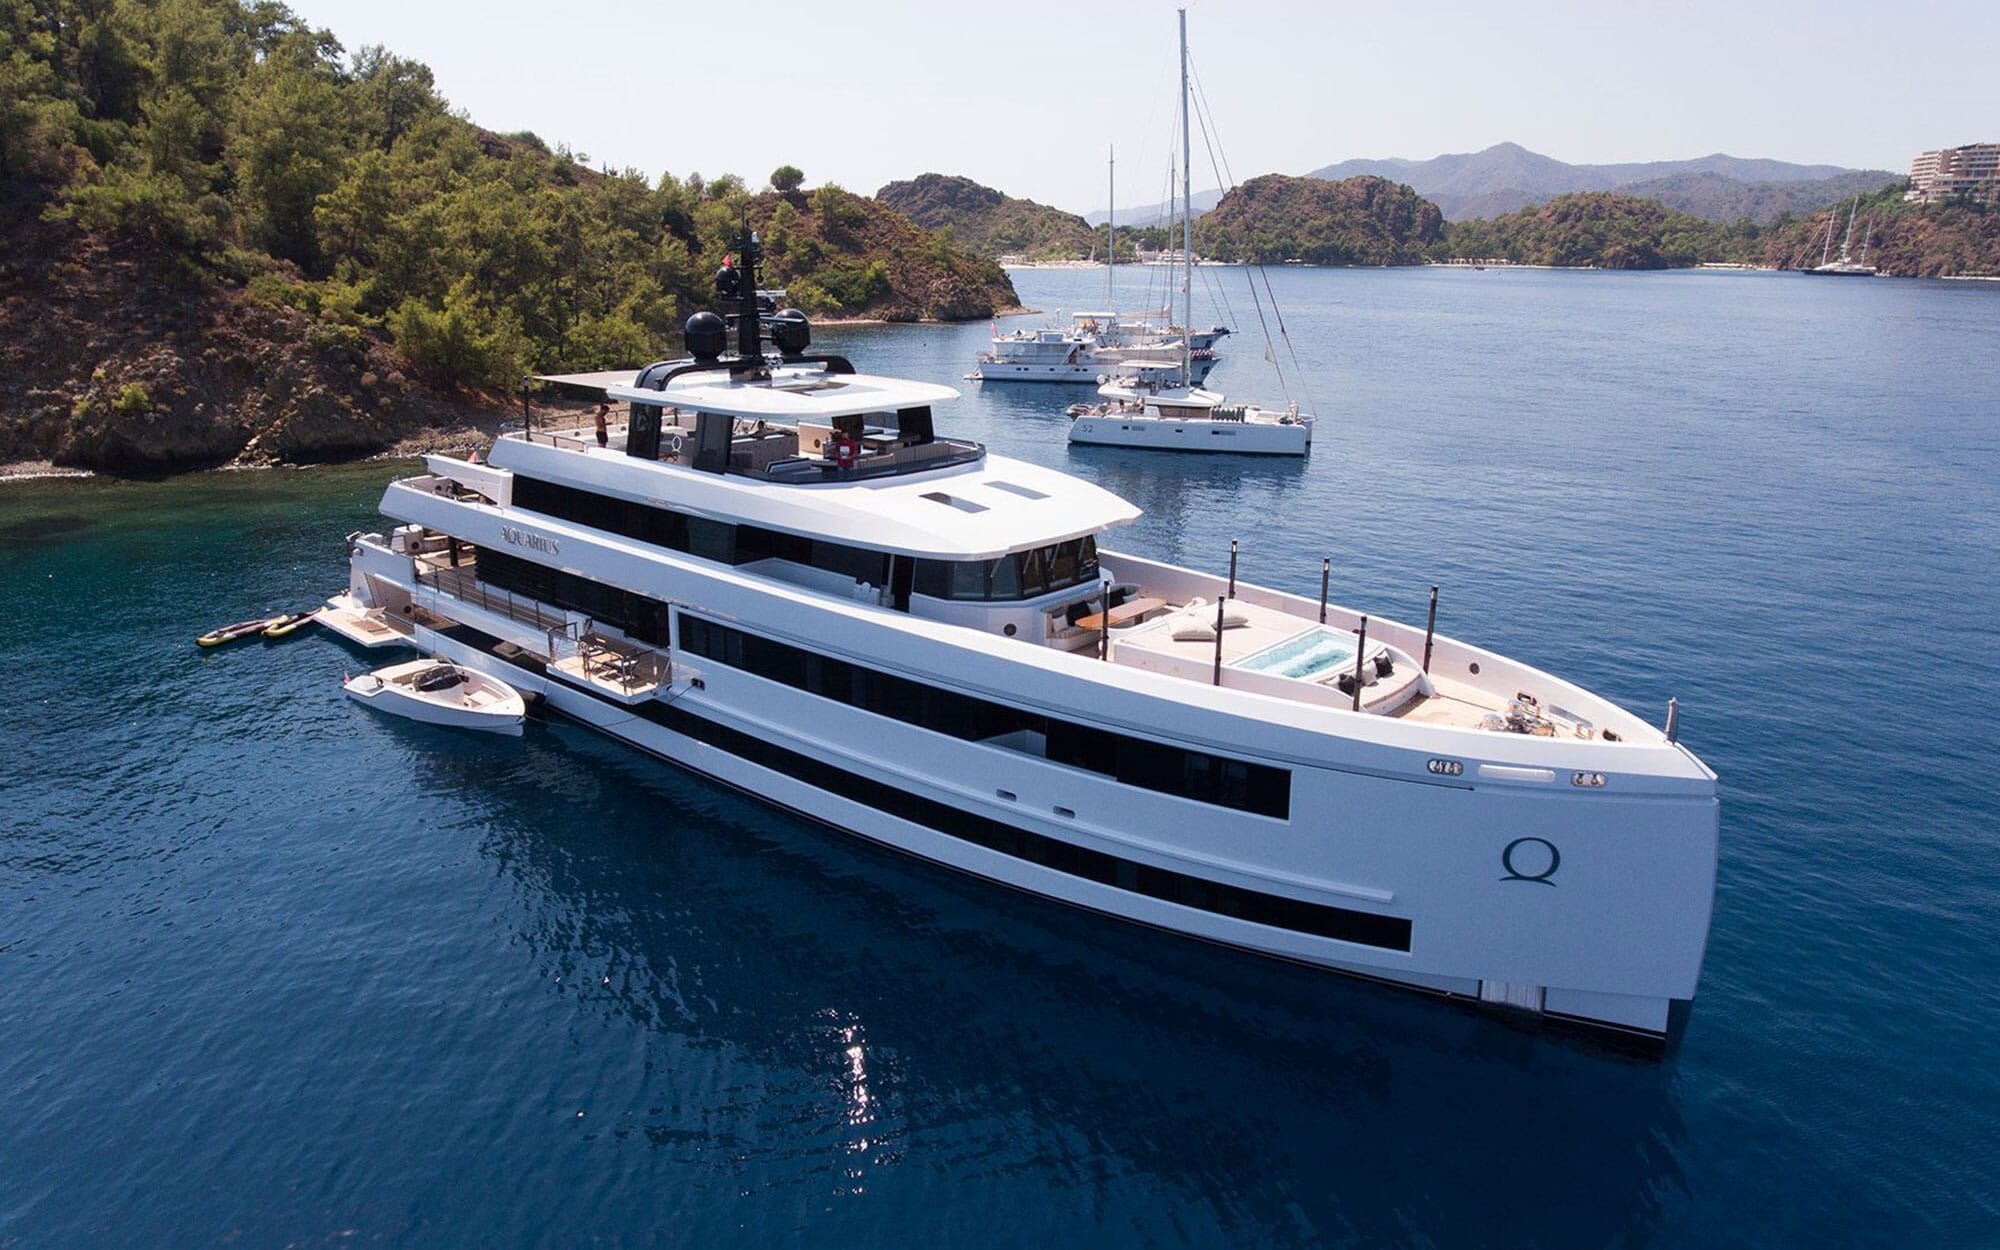 luxury yacht charter companies